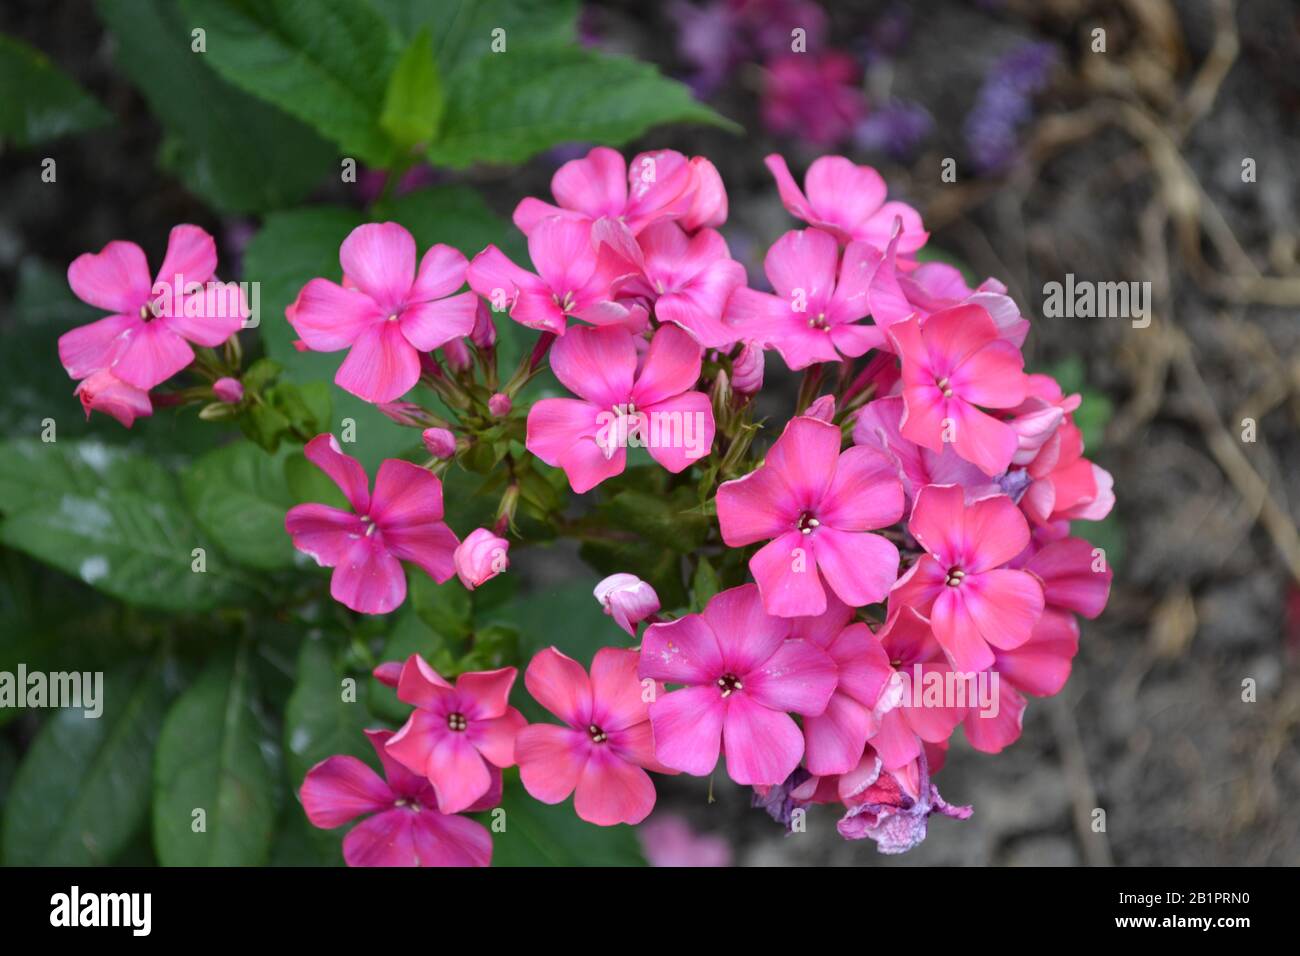 Phlox. Polemoniaceae. Growing flowers. Flowerbed. Garden. Floriculture. Pink inflorescence. Beautiful flowers. Green leaves. Horizontal photo Stock Photo